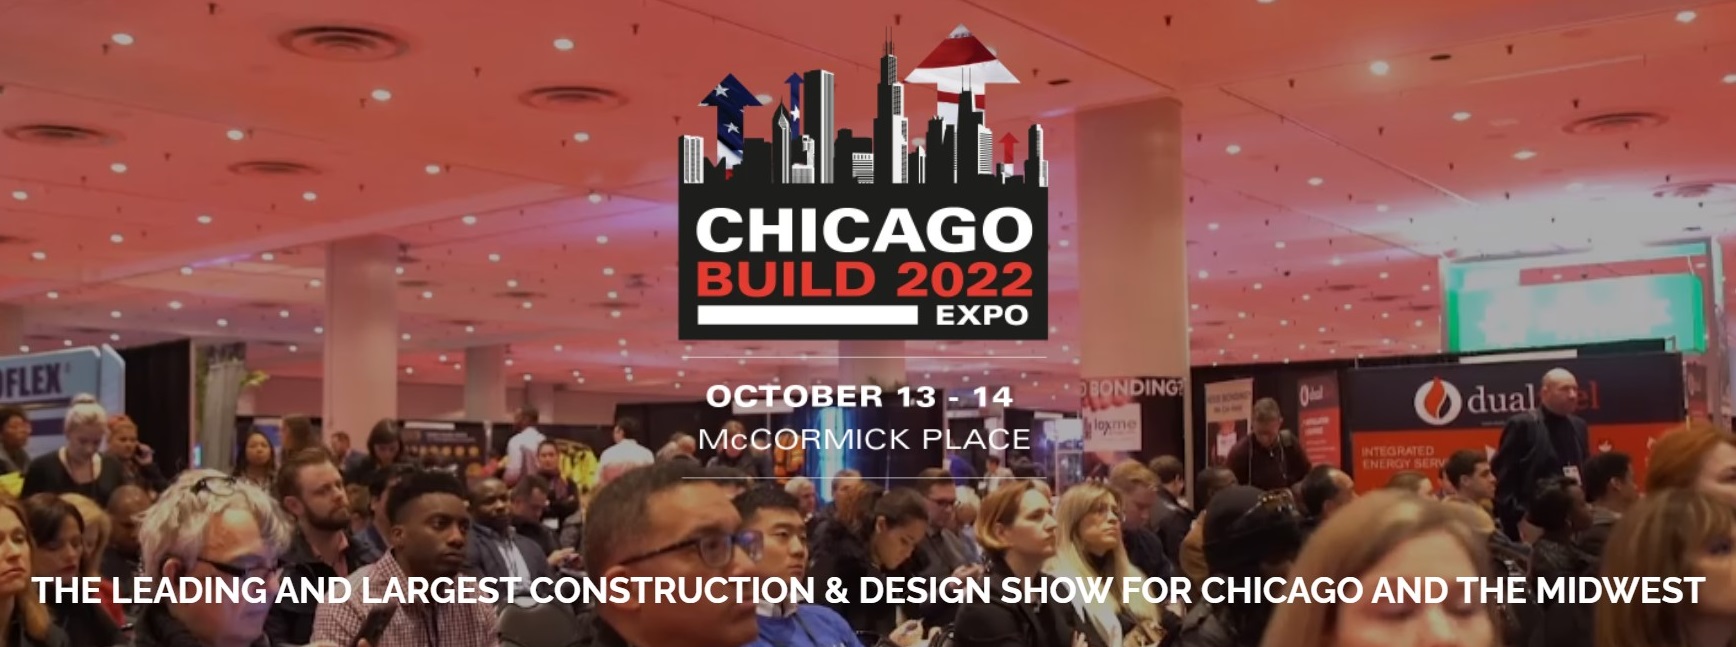 Architecture Event Chicago Build Expo